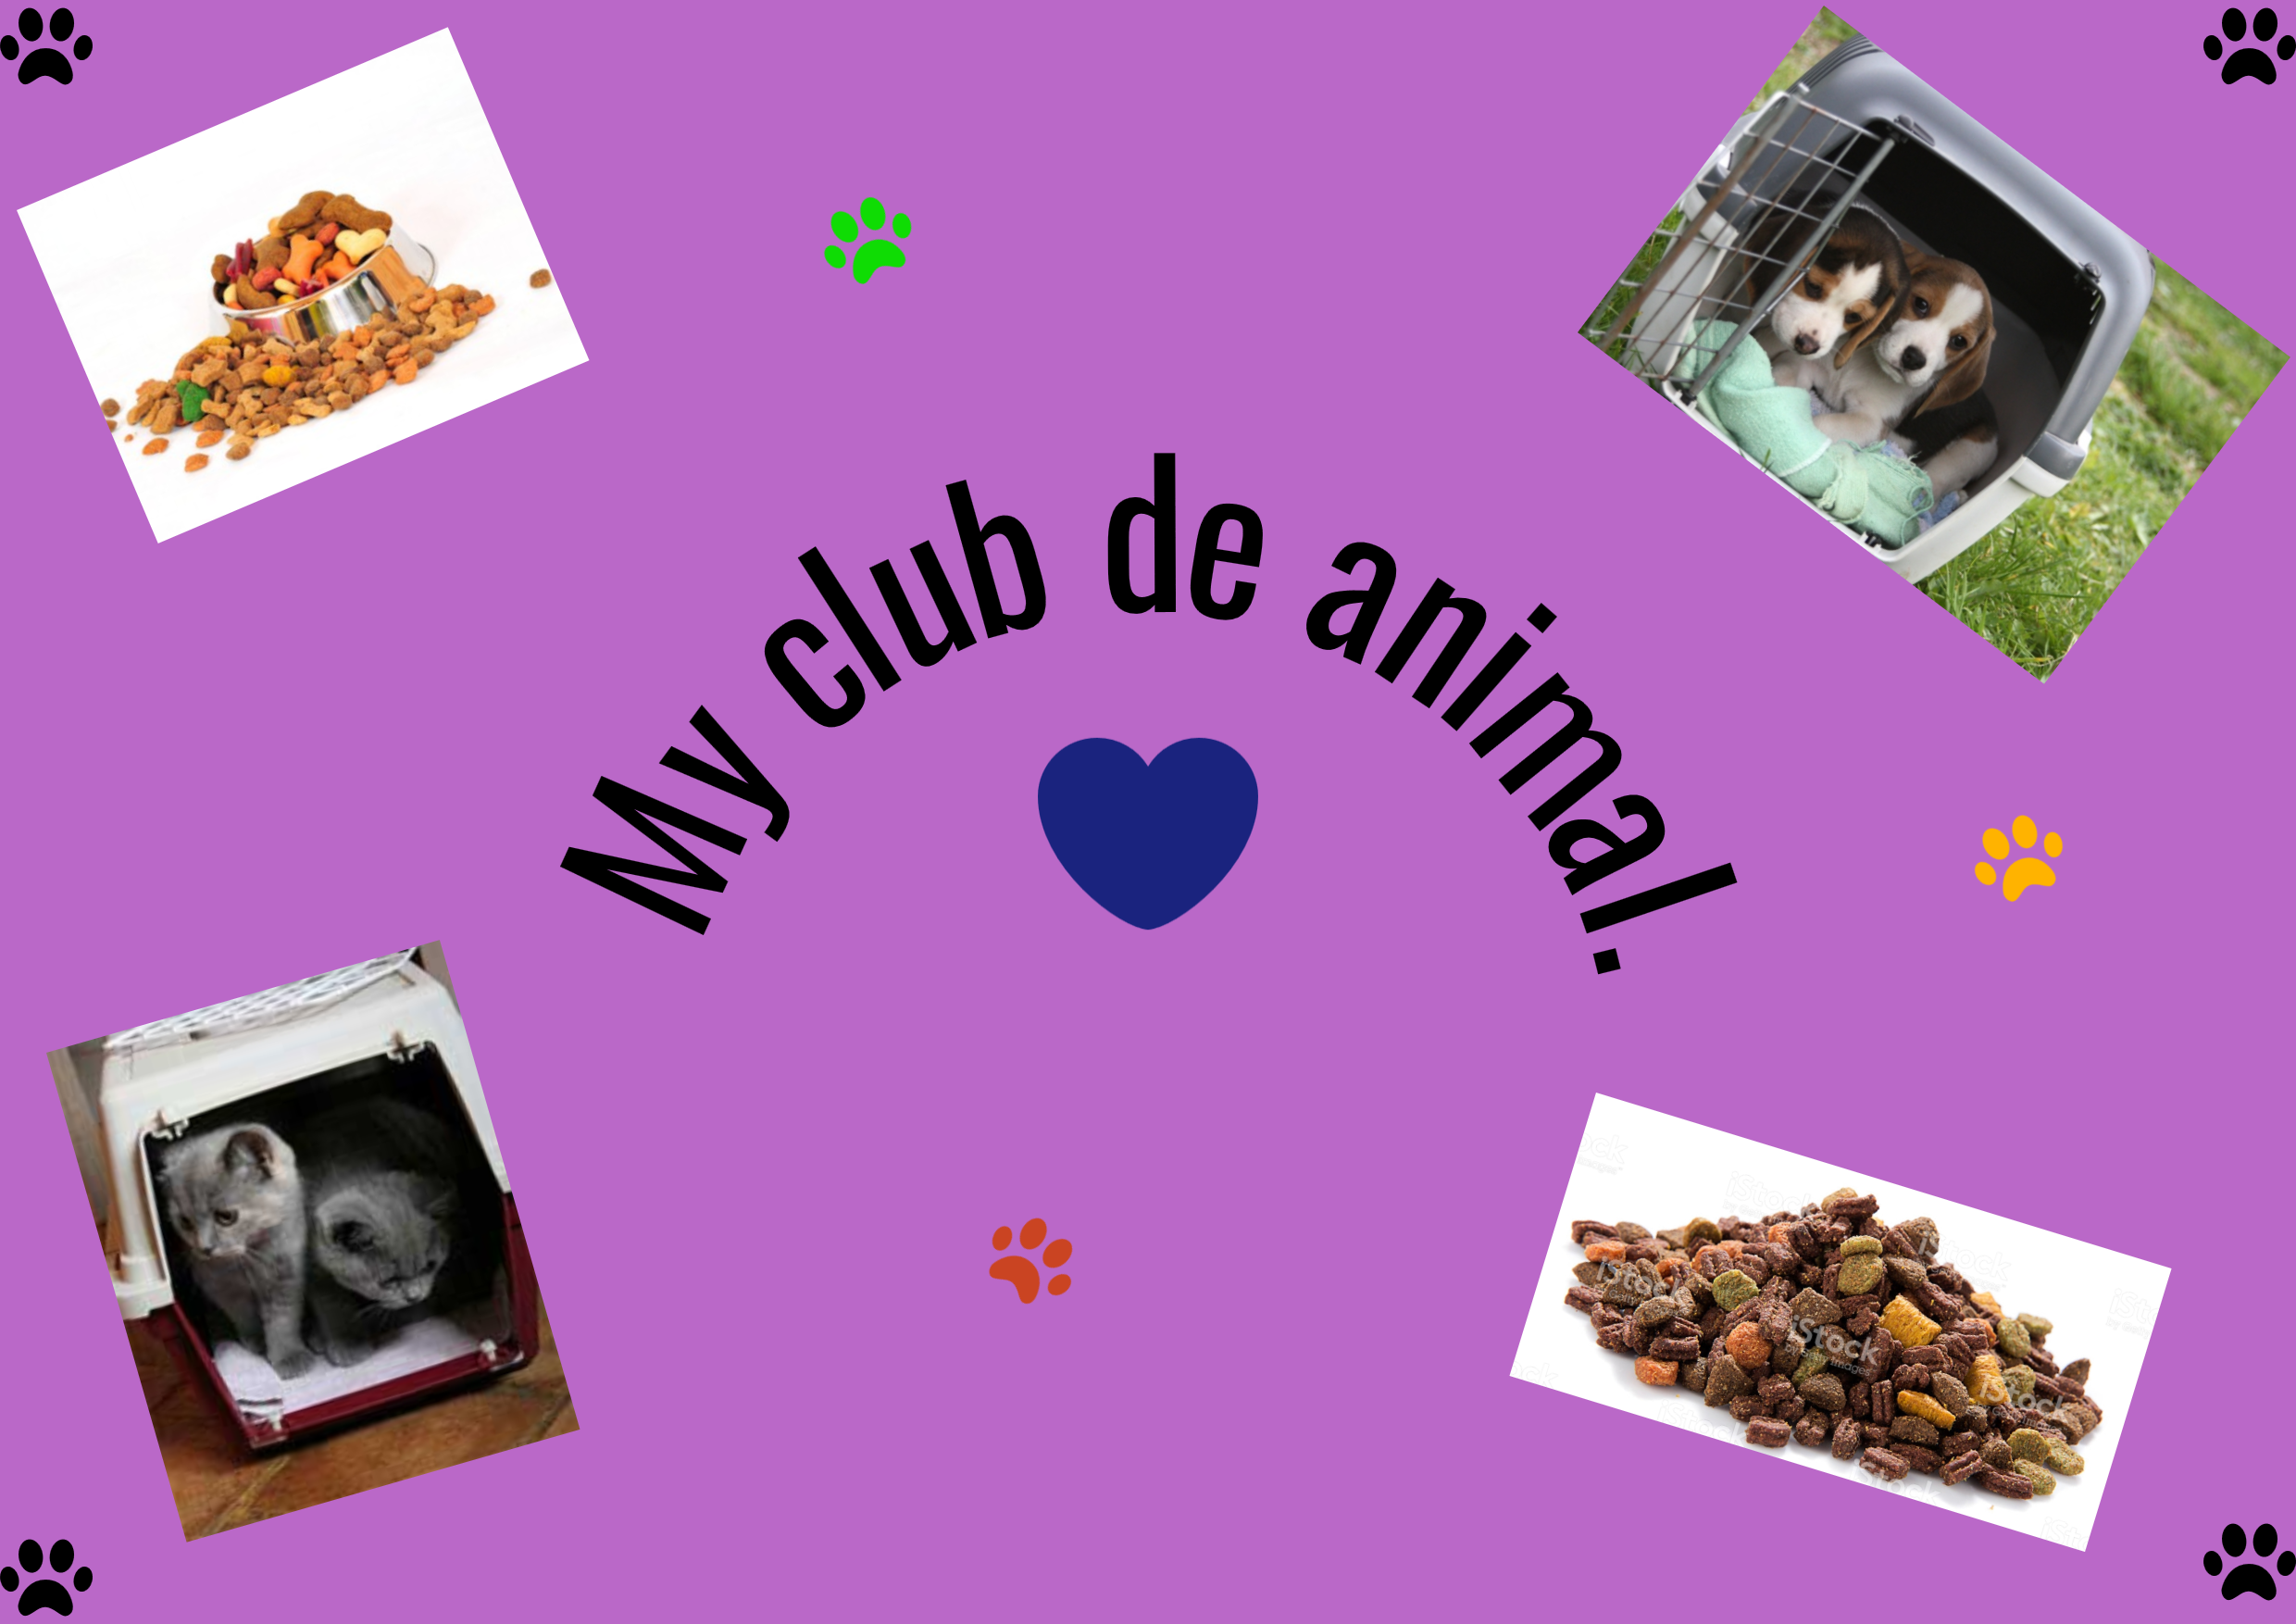 My club de animal Design 